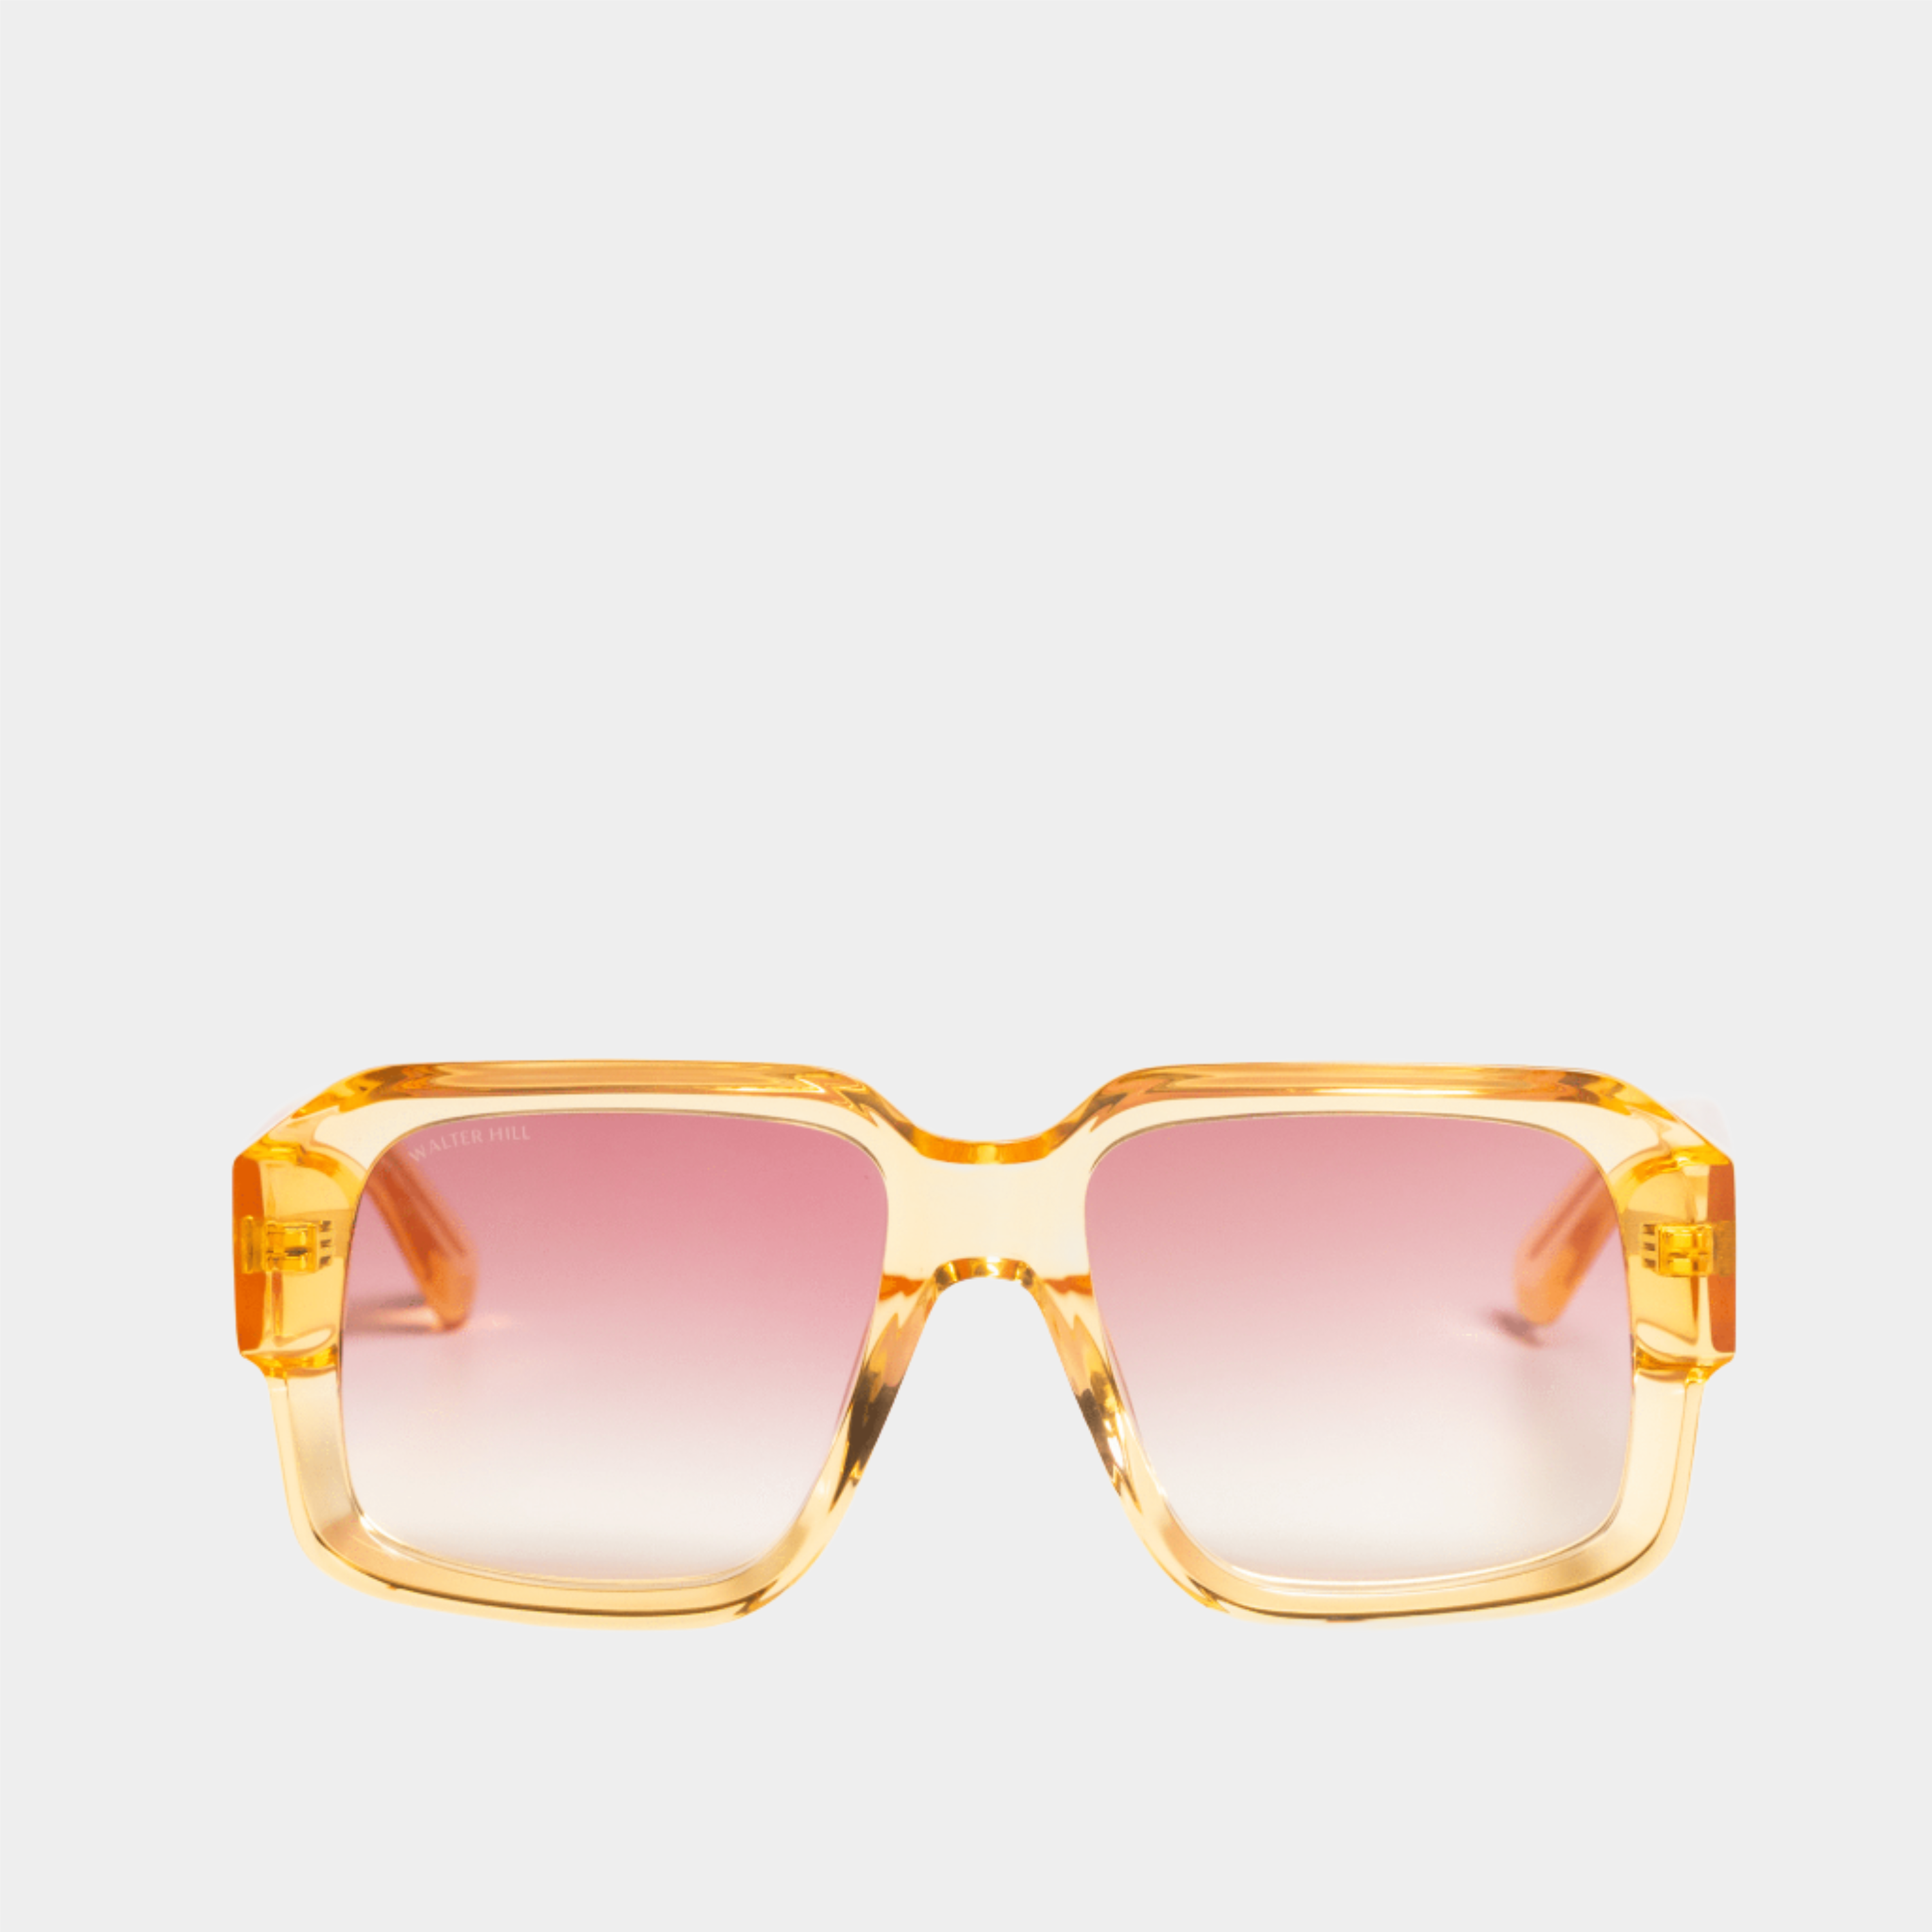 Walter Hill Sunglasses Medium/Large / Cat.2 / Mazzucchelli Acetate AJ - Satsuma